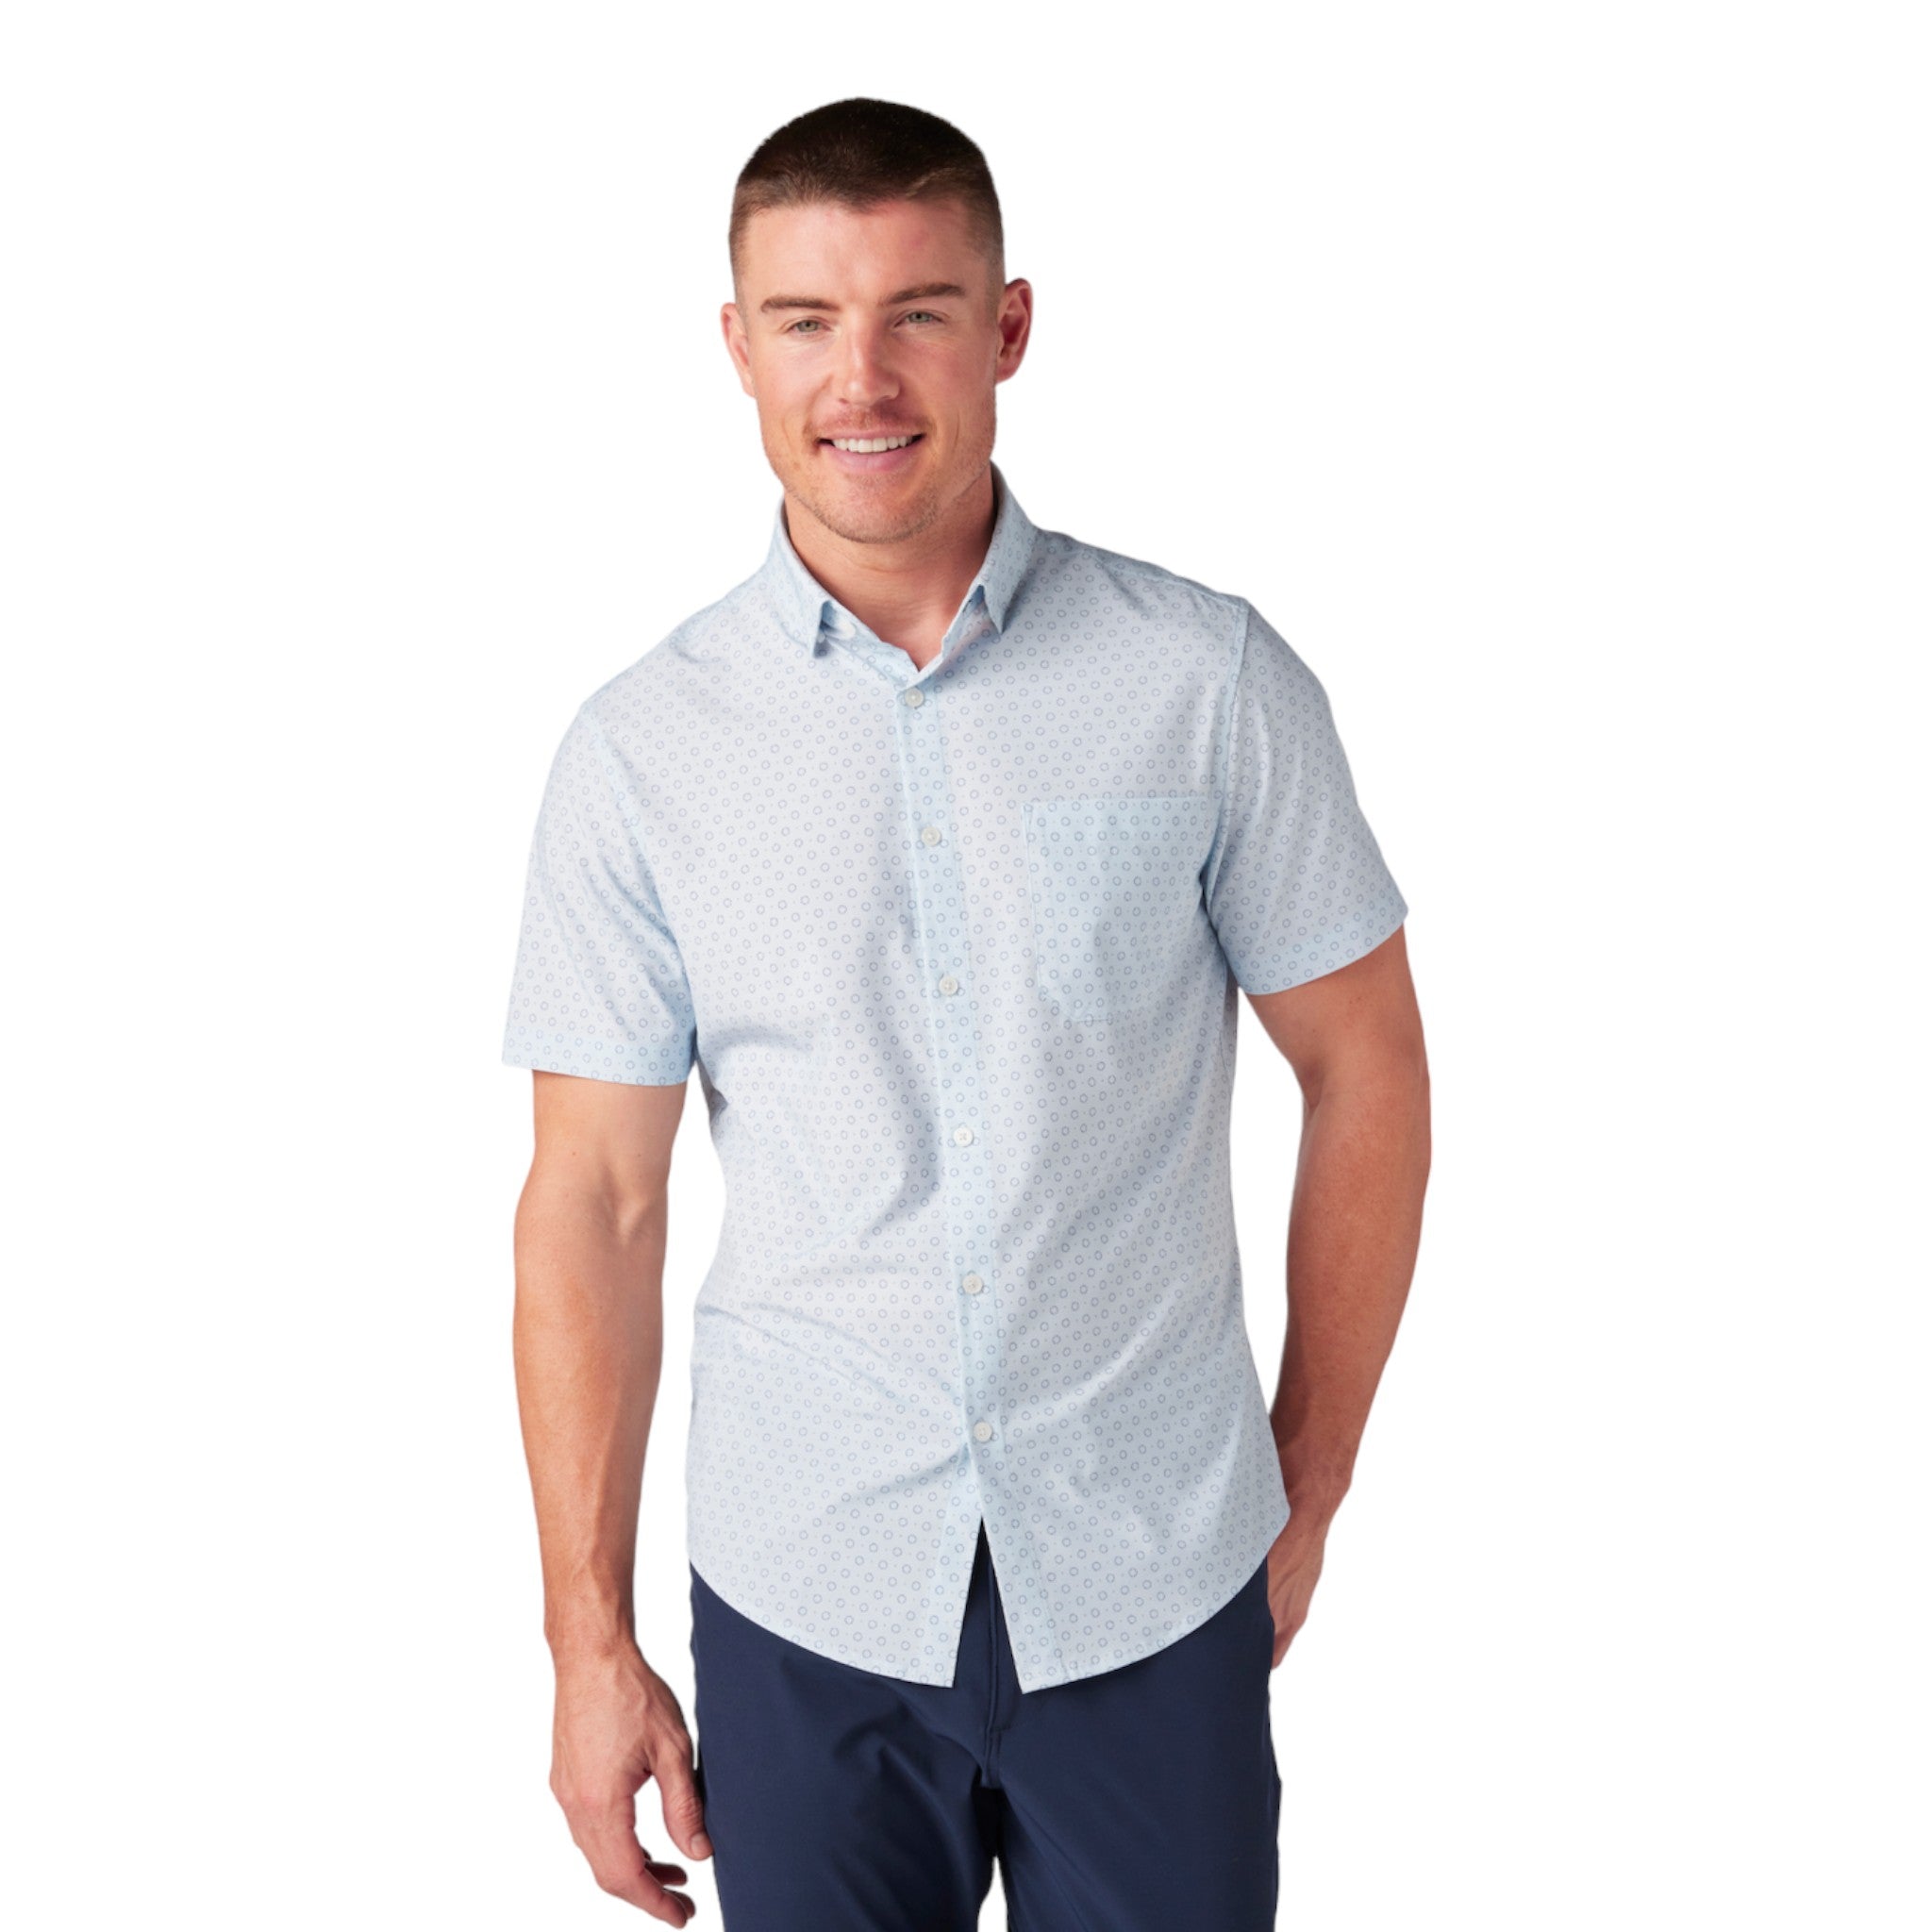 Mizzen & Main - Leeward Short Sleeve Dress Shirt - Sky Circle Dot